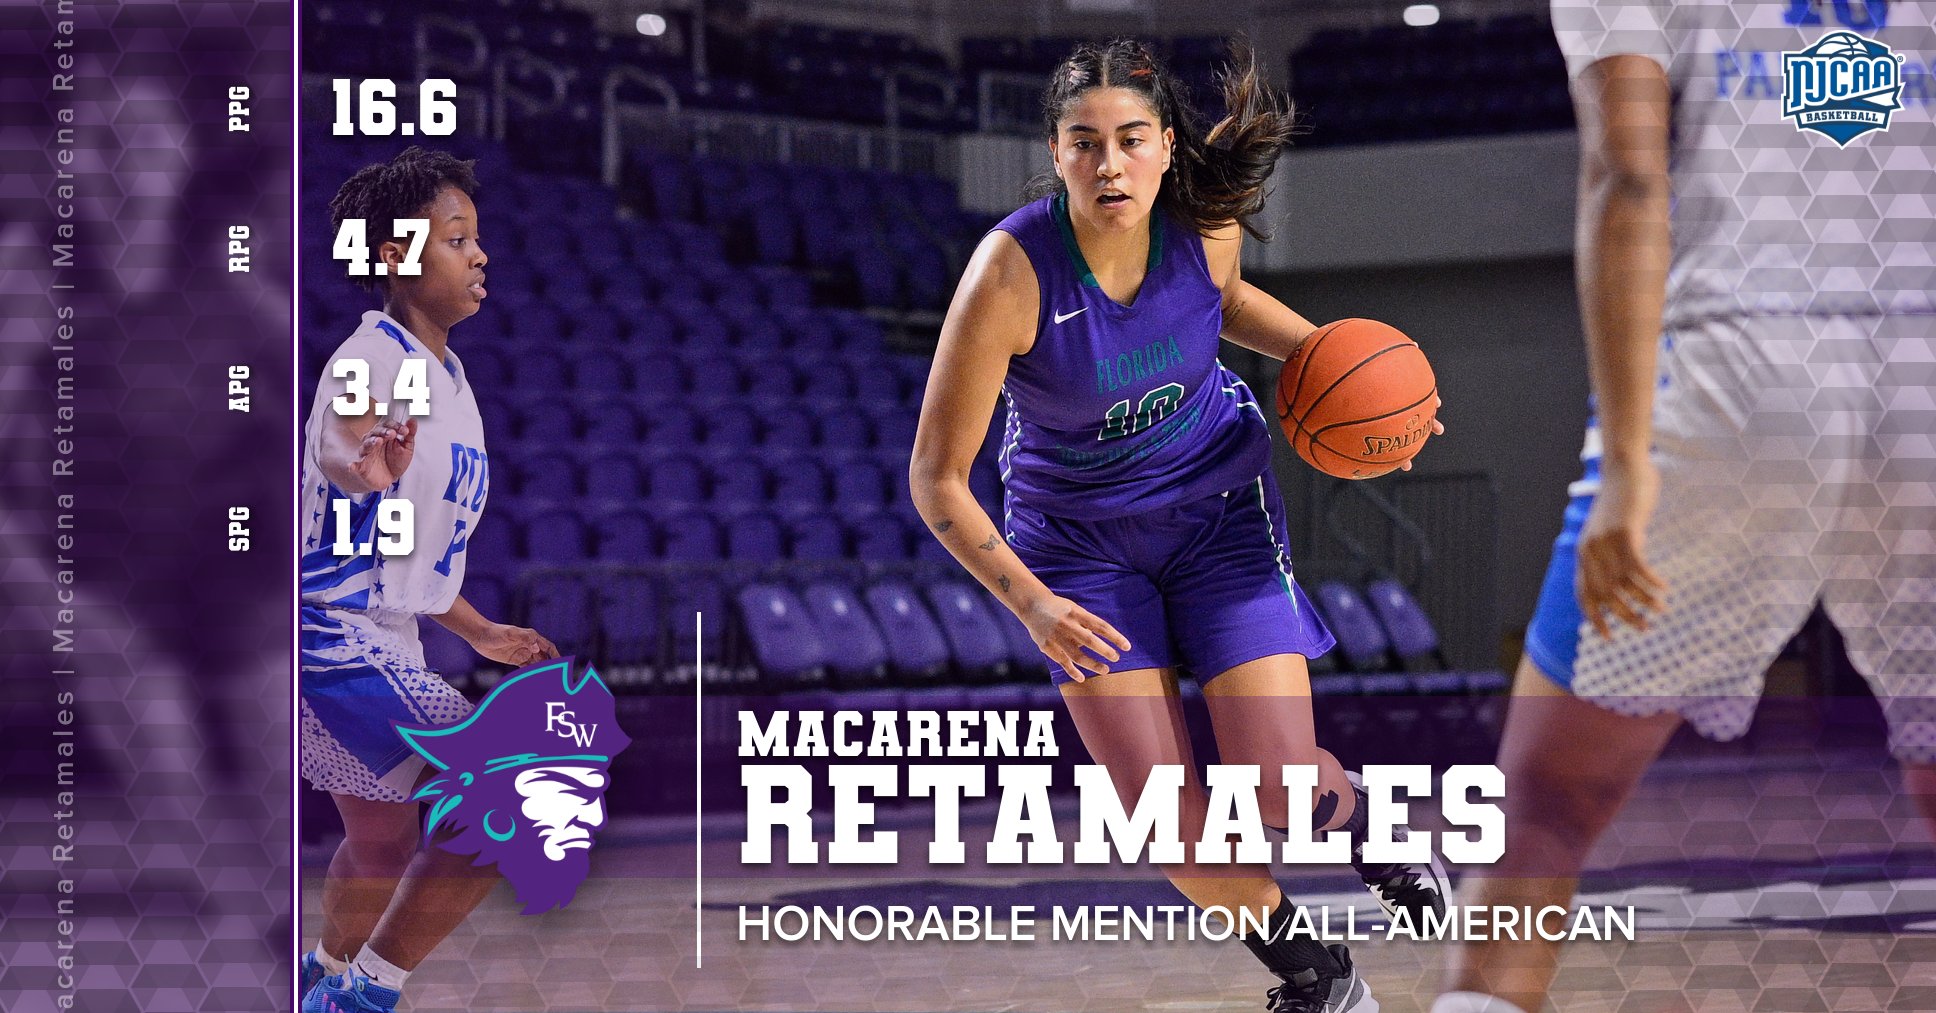 Retamales Named Honorable Mention All-American